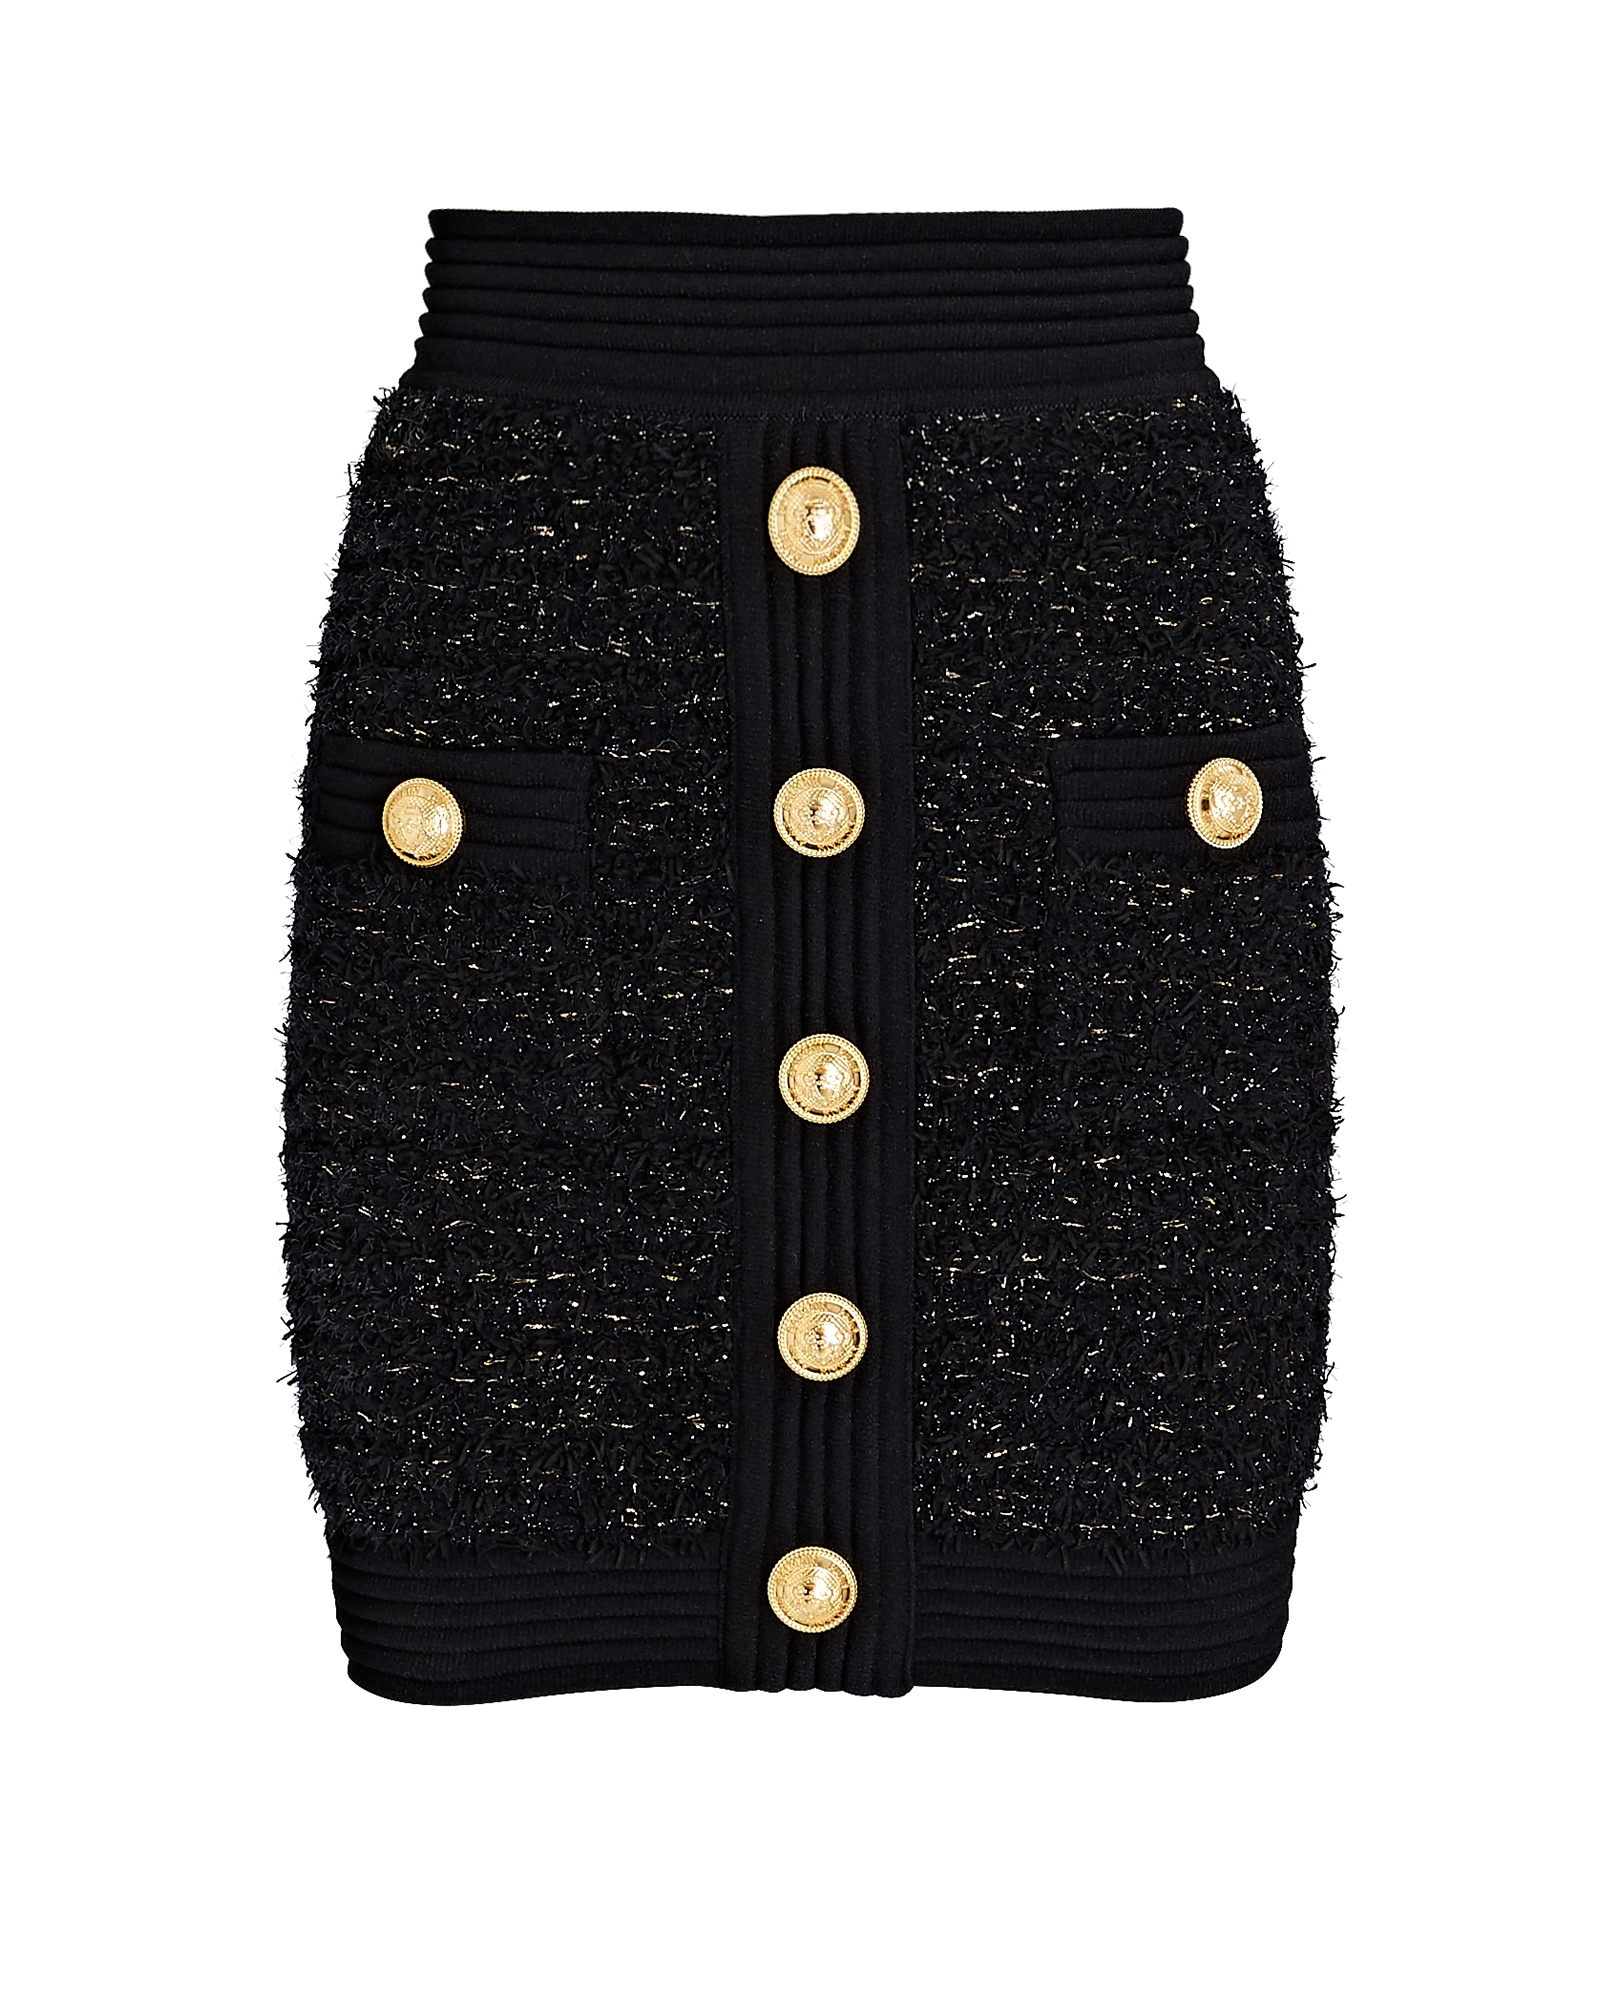 Balmain Lurex Tweed Mini Skirt | INTERMIX®